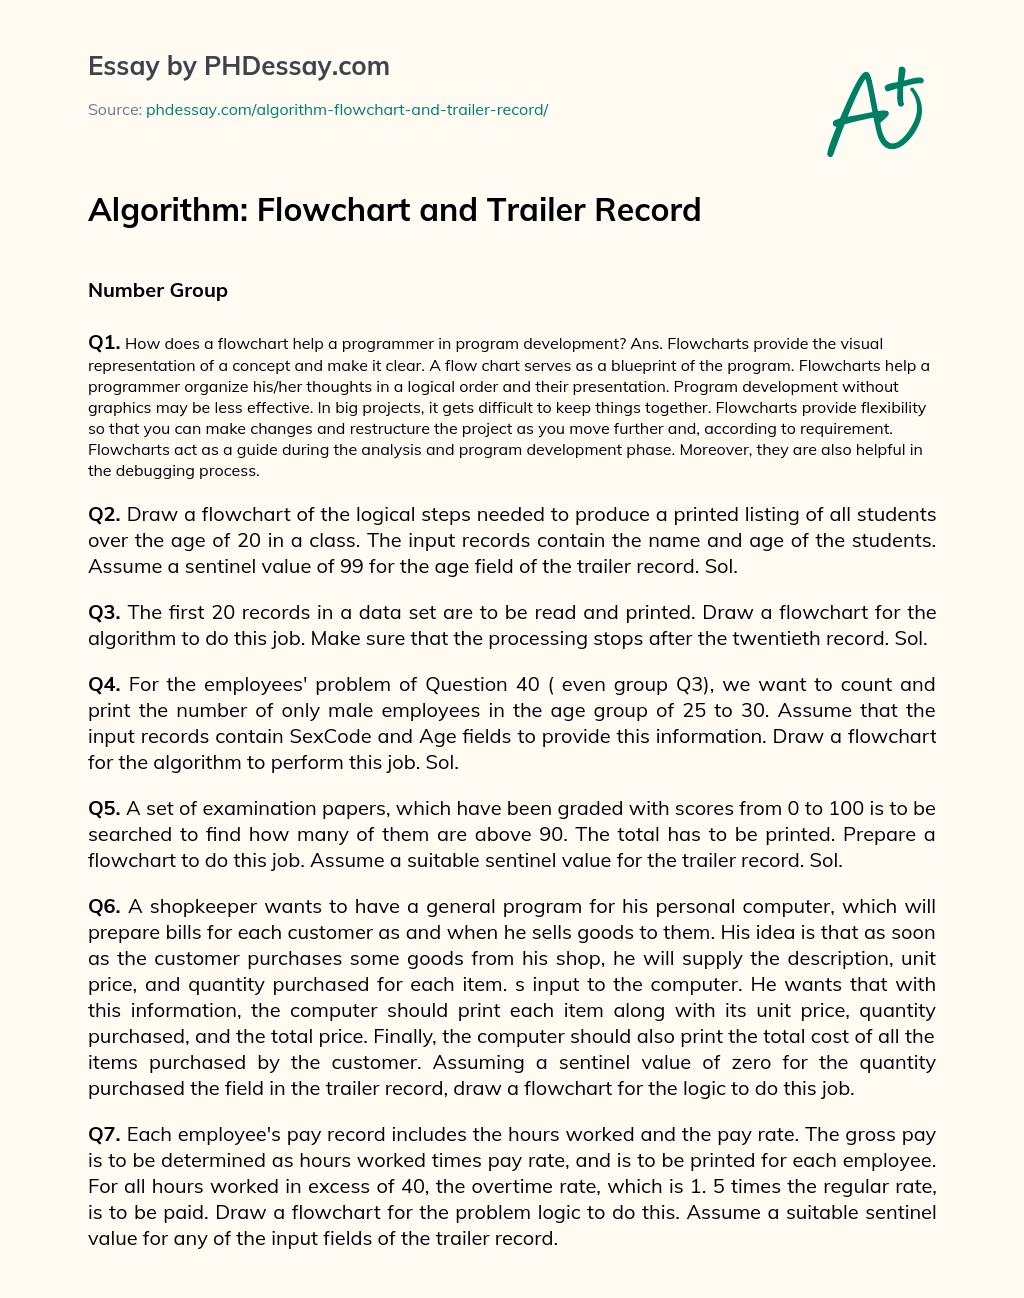 Algorithm: Flowchart and Trailer Record essay